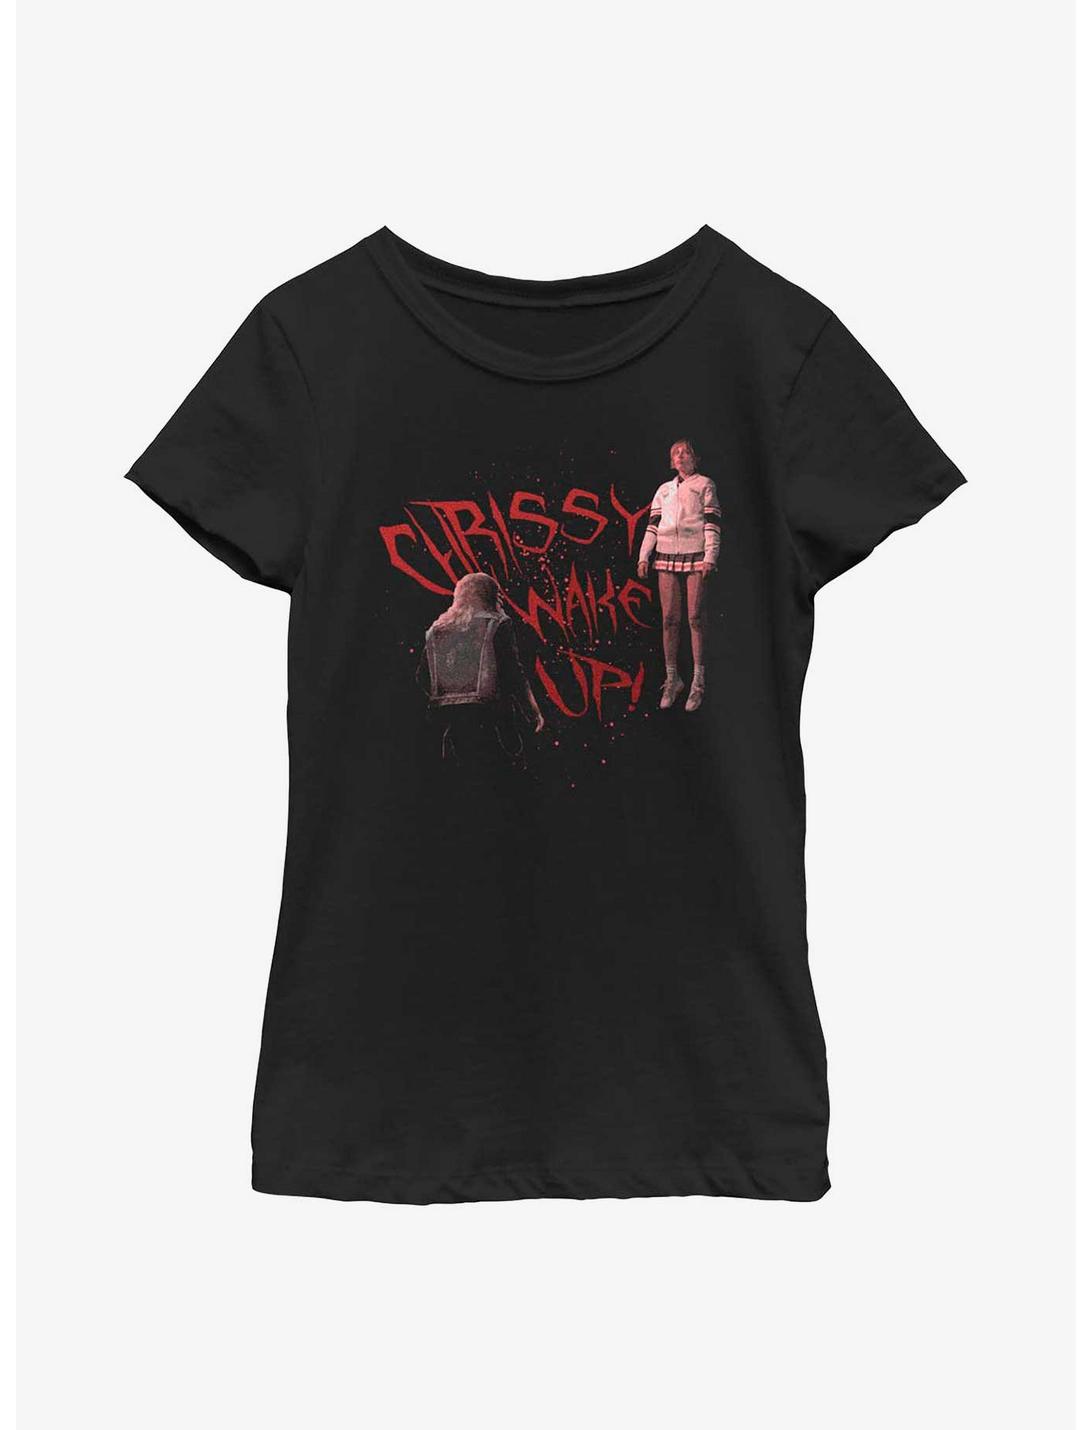 Stranger Things Chrissy Wake Up! Youth Girls T-Shirt, BLACK, hi-res